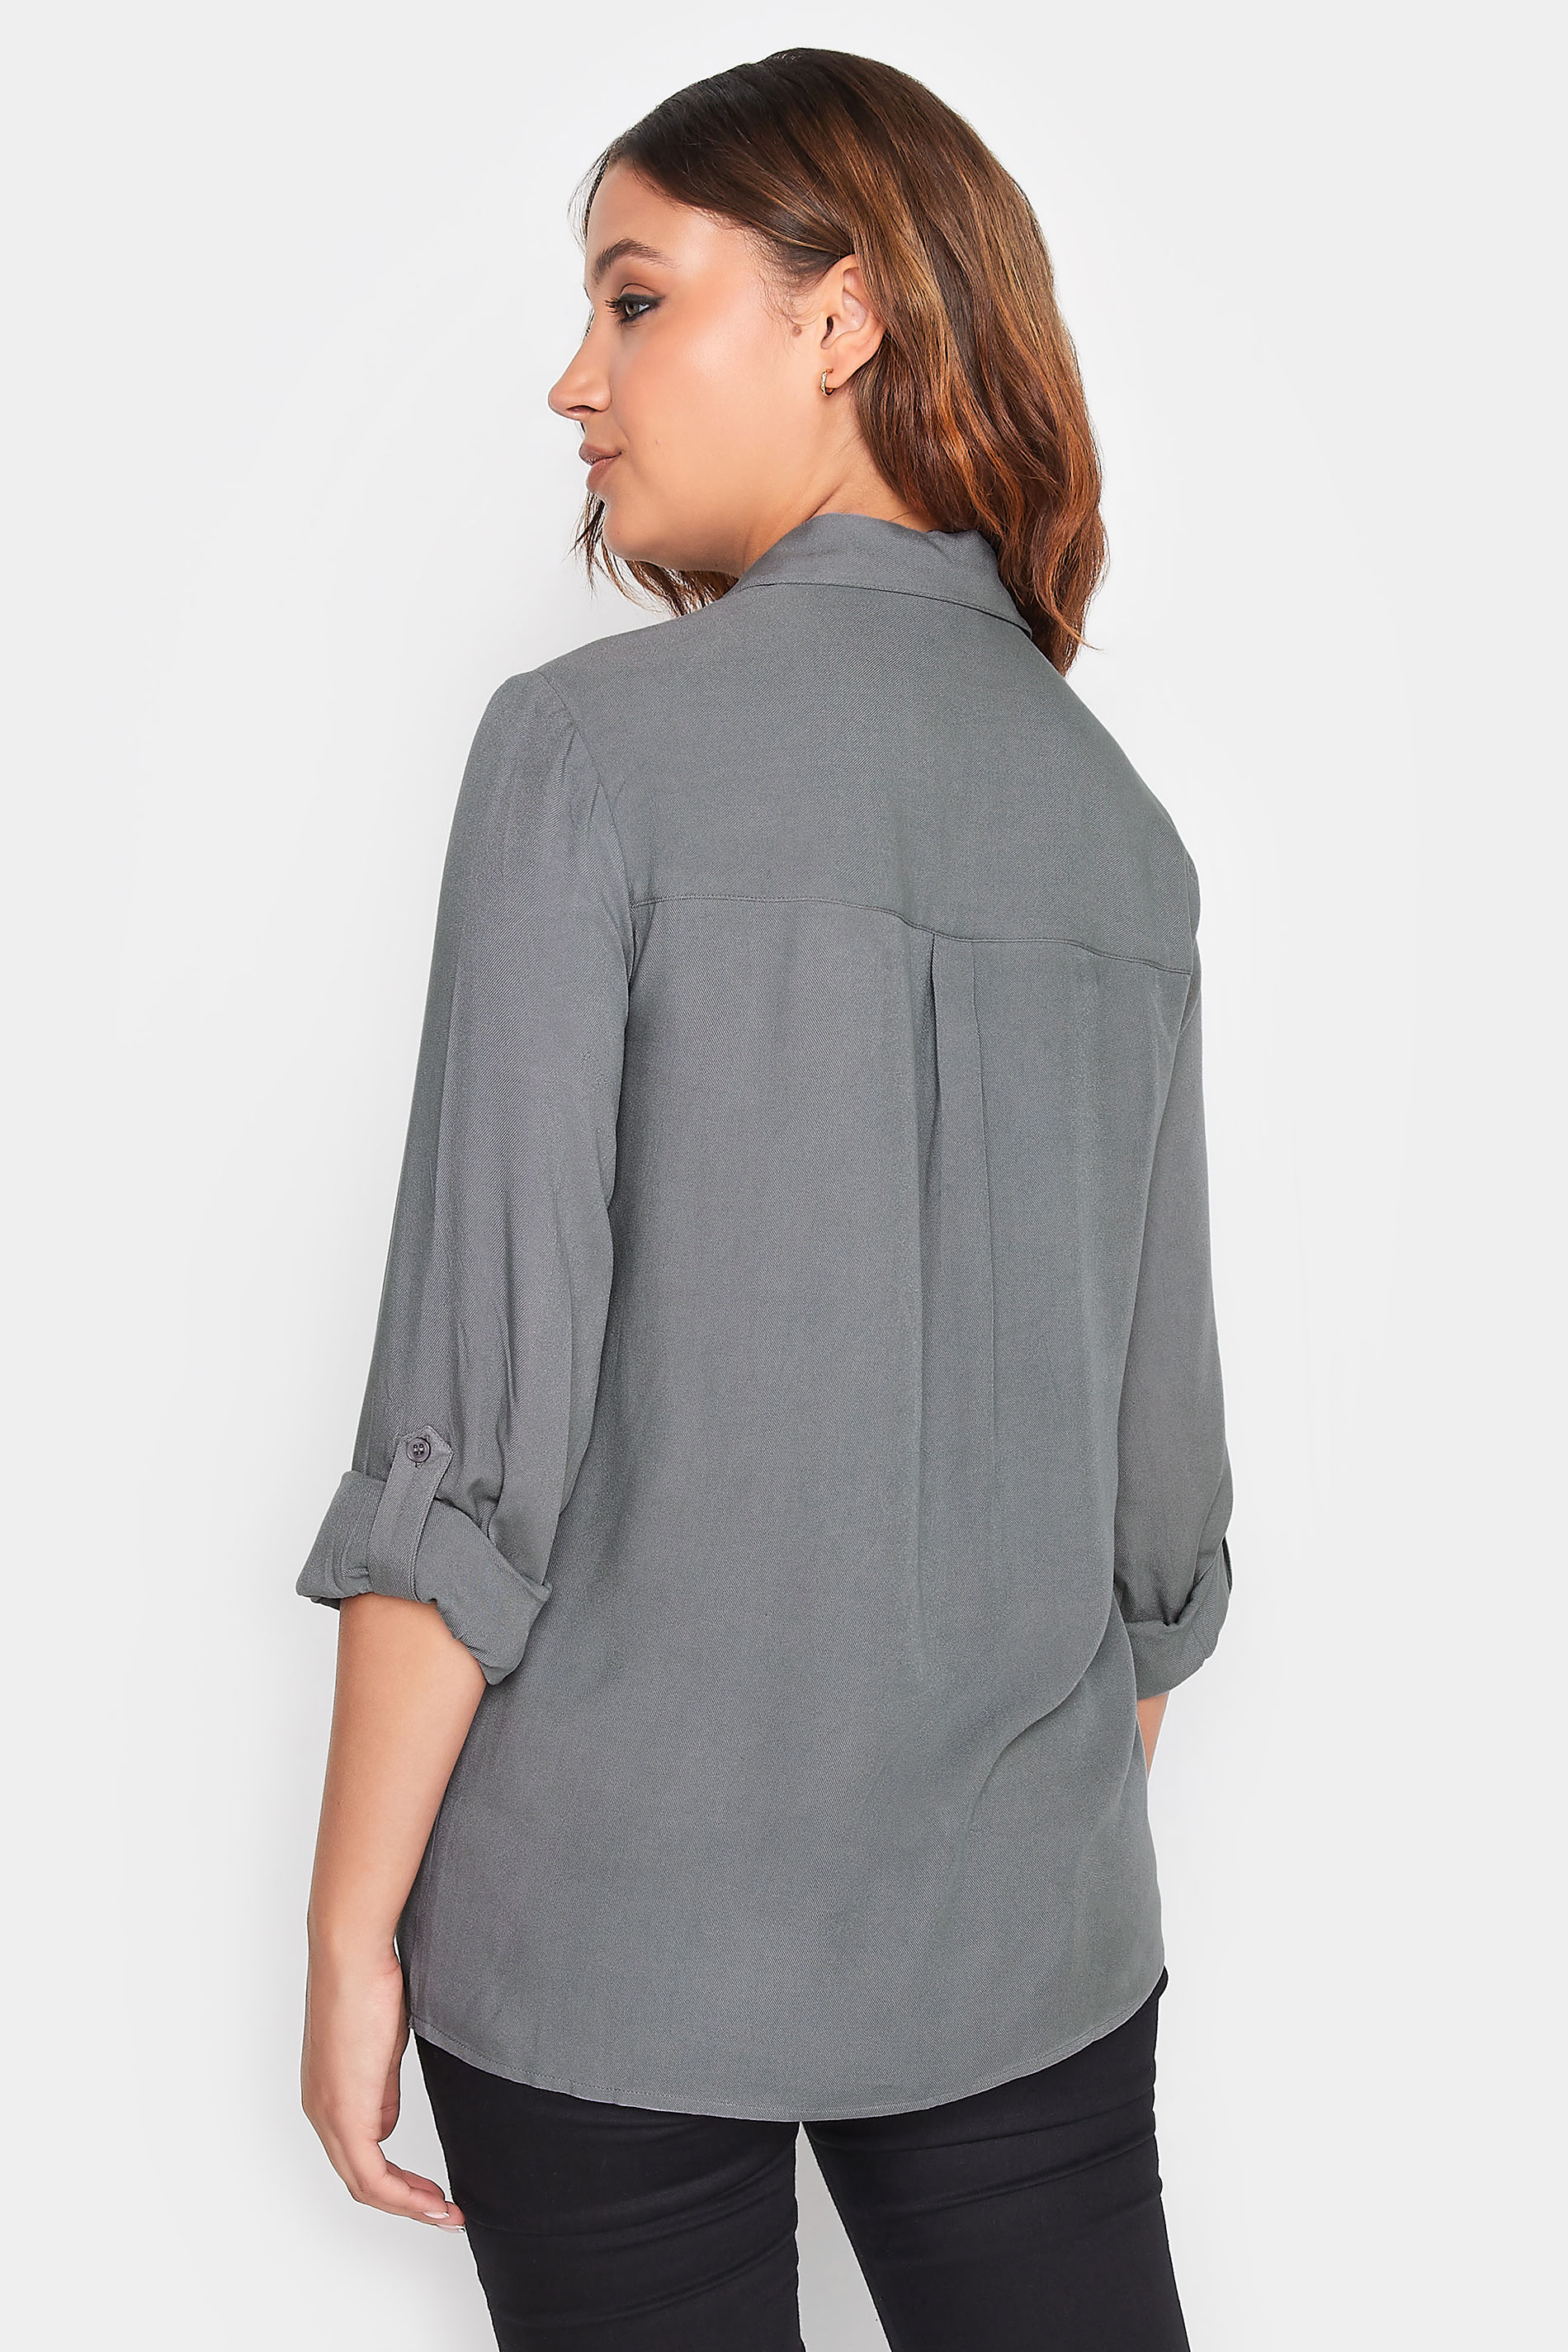 LTS Tall Grey Long Sleeve Utility Shirt | Long Tall Sally 3